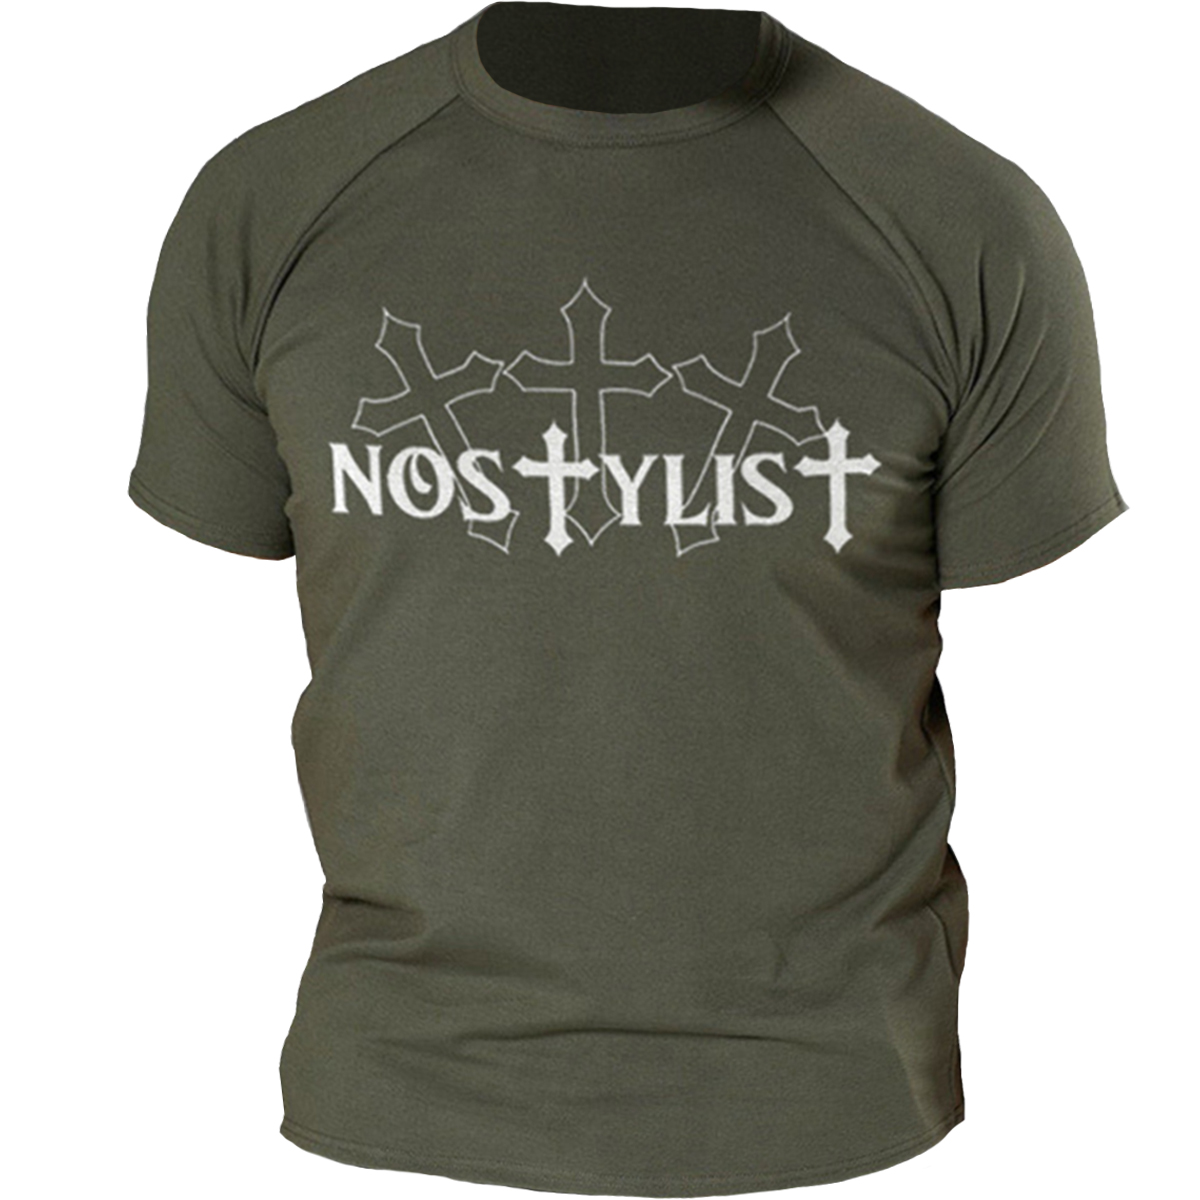 Men's Casual Nostylist Round Neck Chic Short Sleeve T-shirt